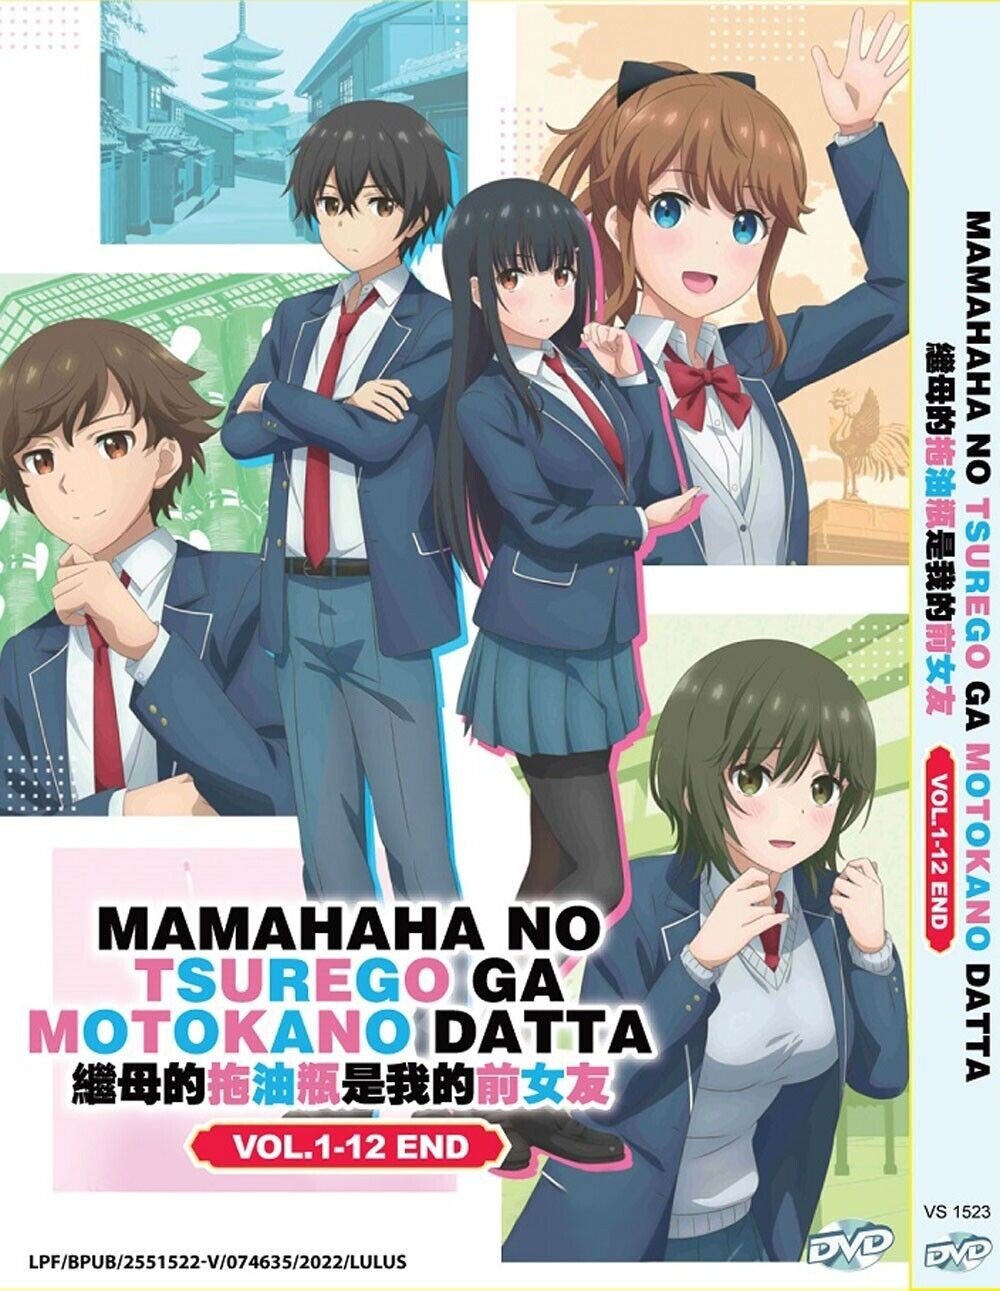 Mamahaha no Tsurego ga Motokano datta - Information, Curiosities